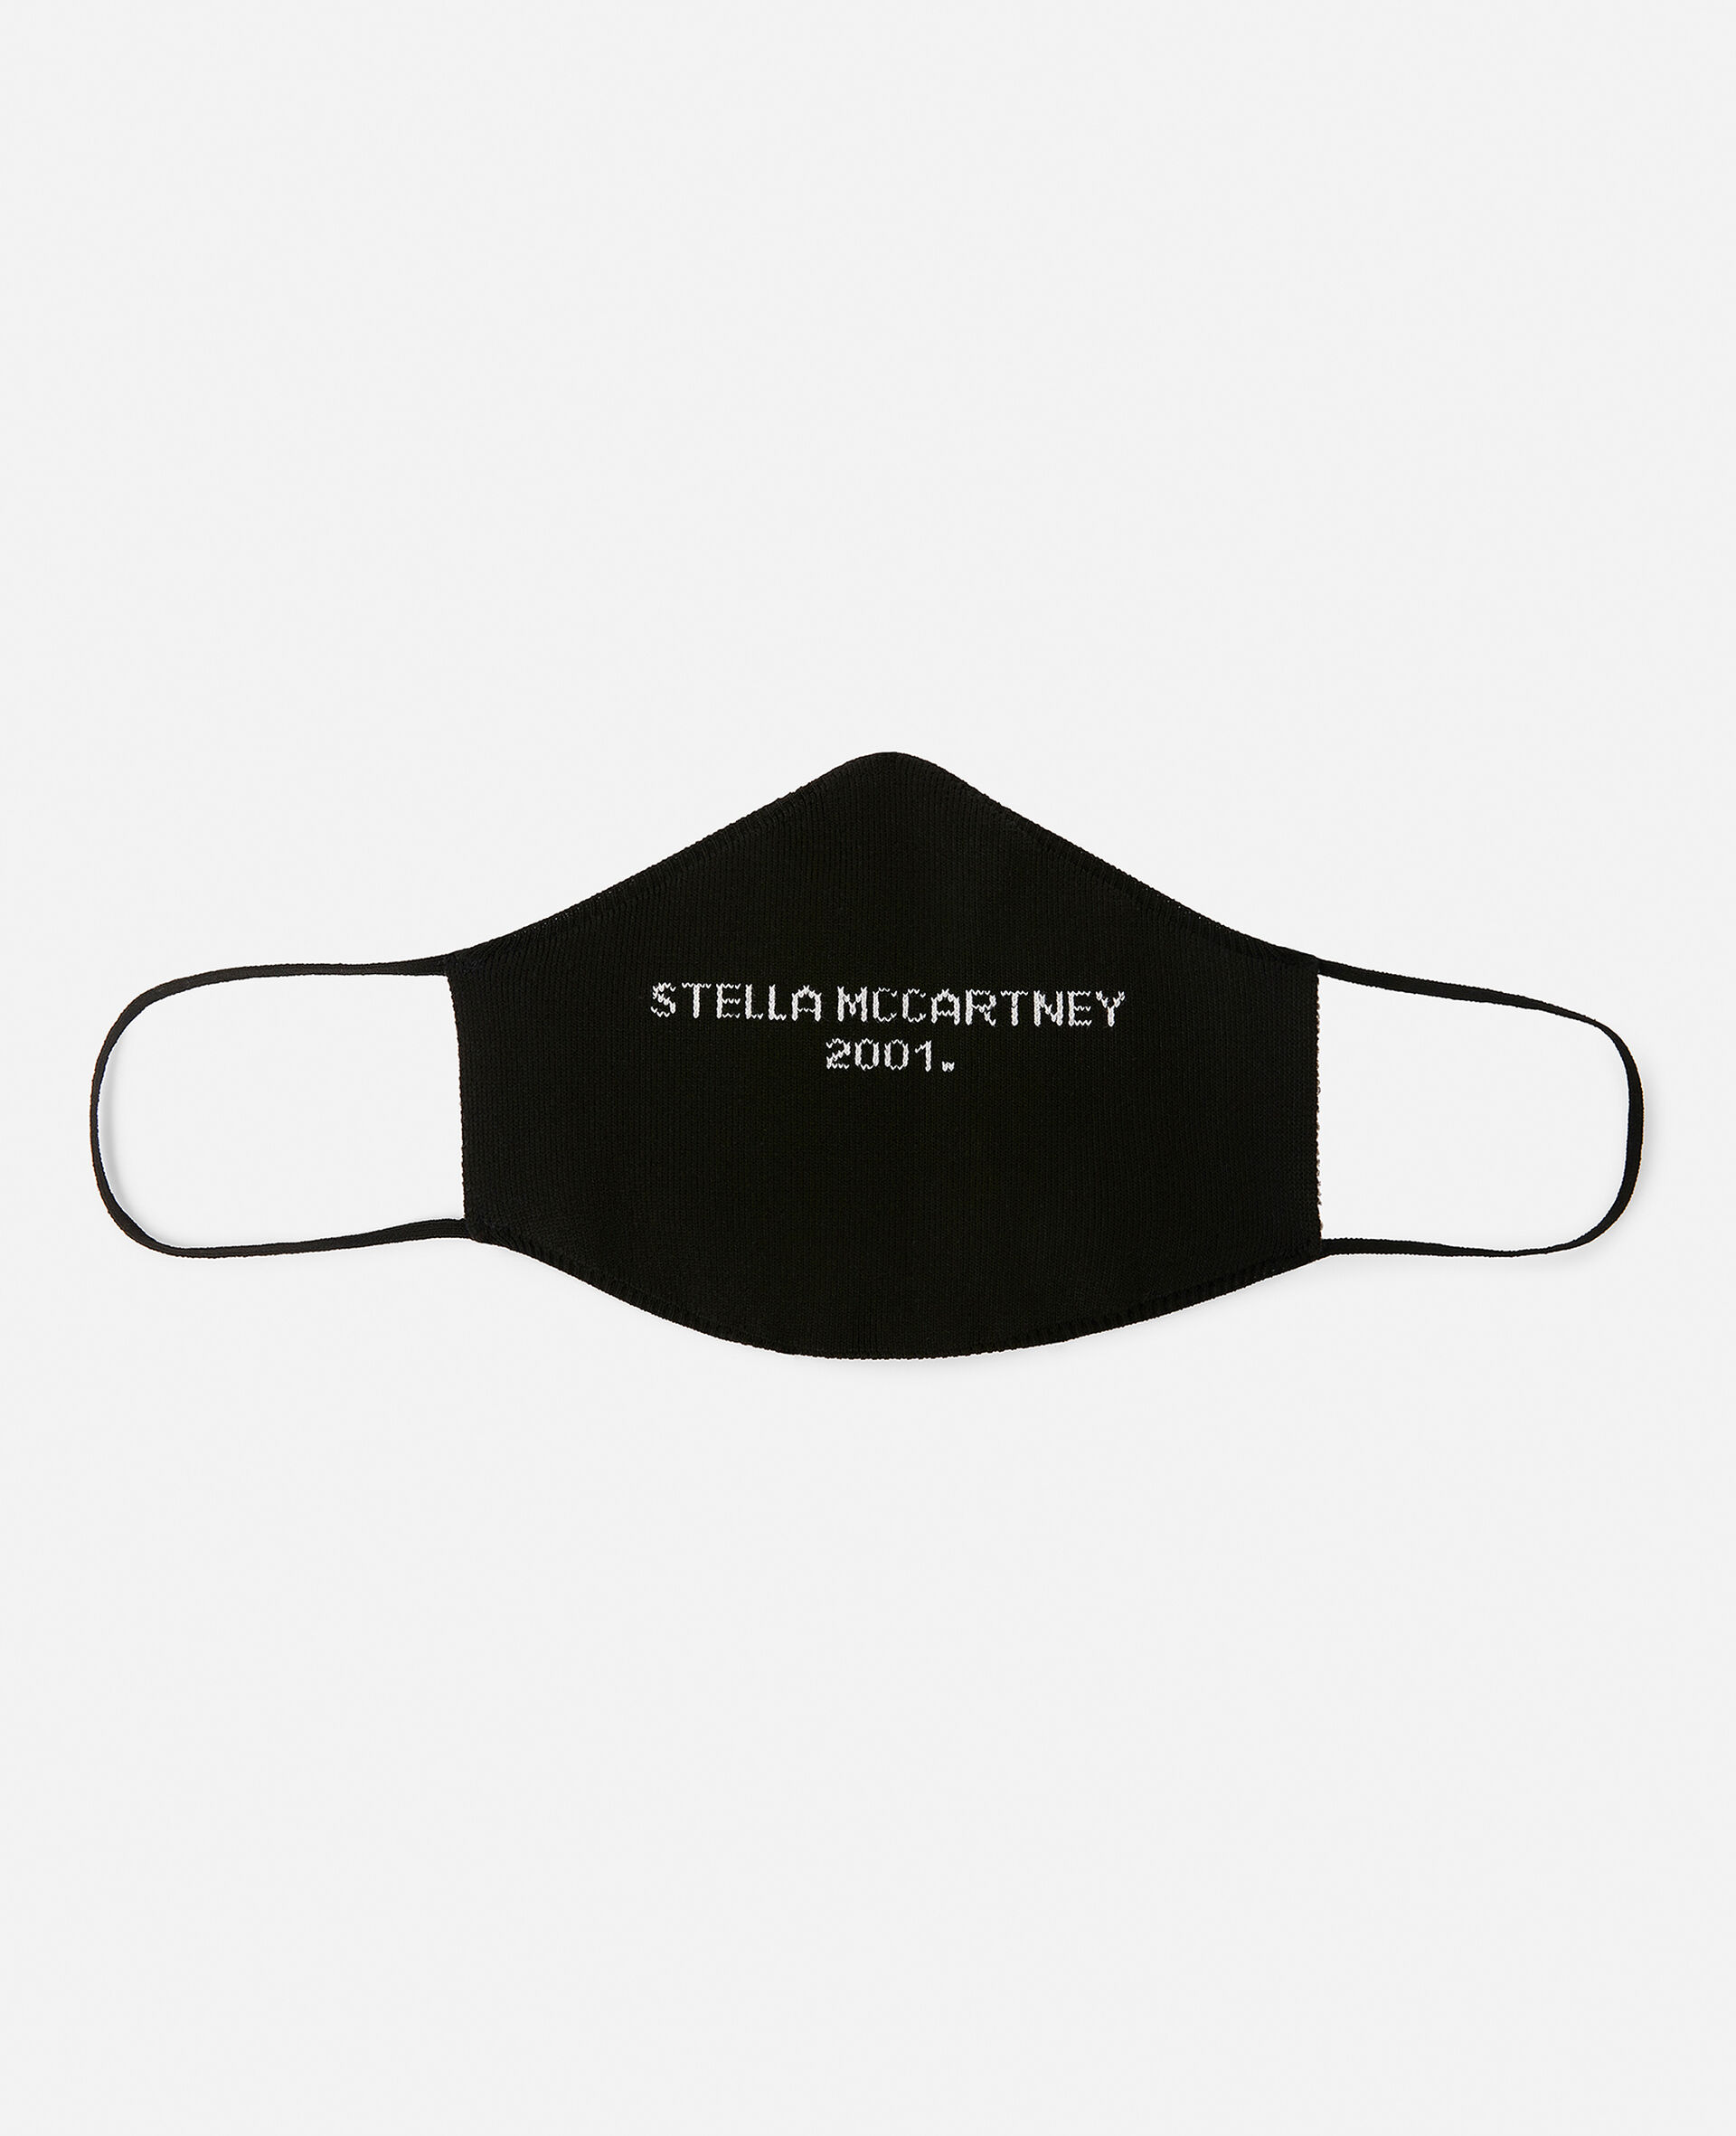 'Stella McCartney 2001' Face Mask -Black-large image number 0